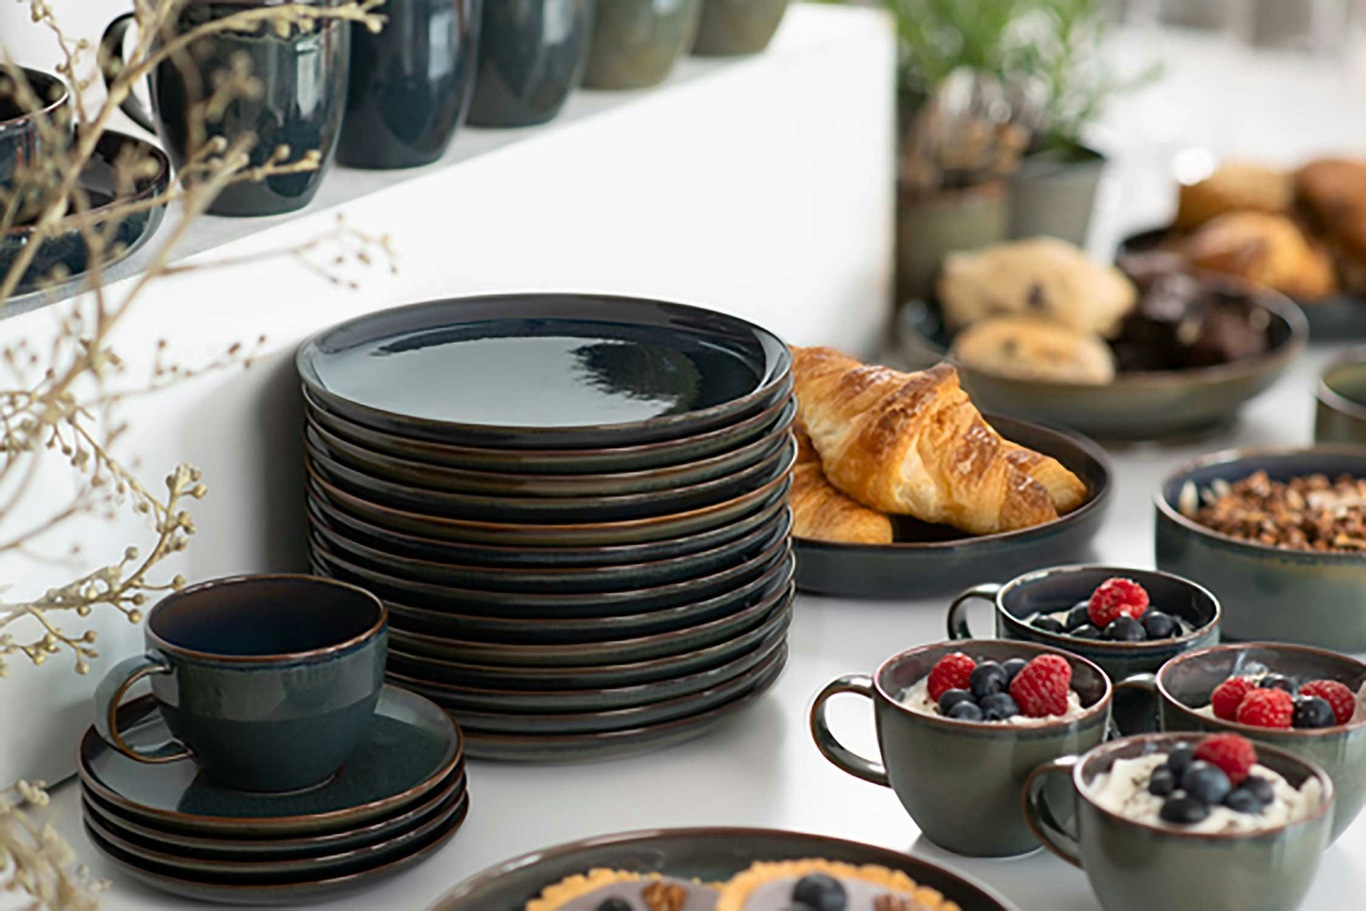 https://royaldesign.com/image/2/villeroy-boch-crafted-denim-breakfast-set-6pcs-4?w=800&quality=80